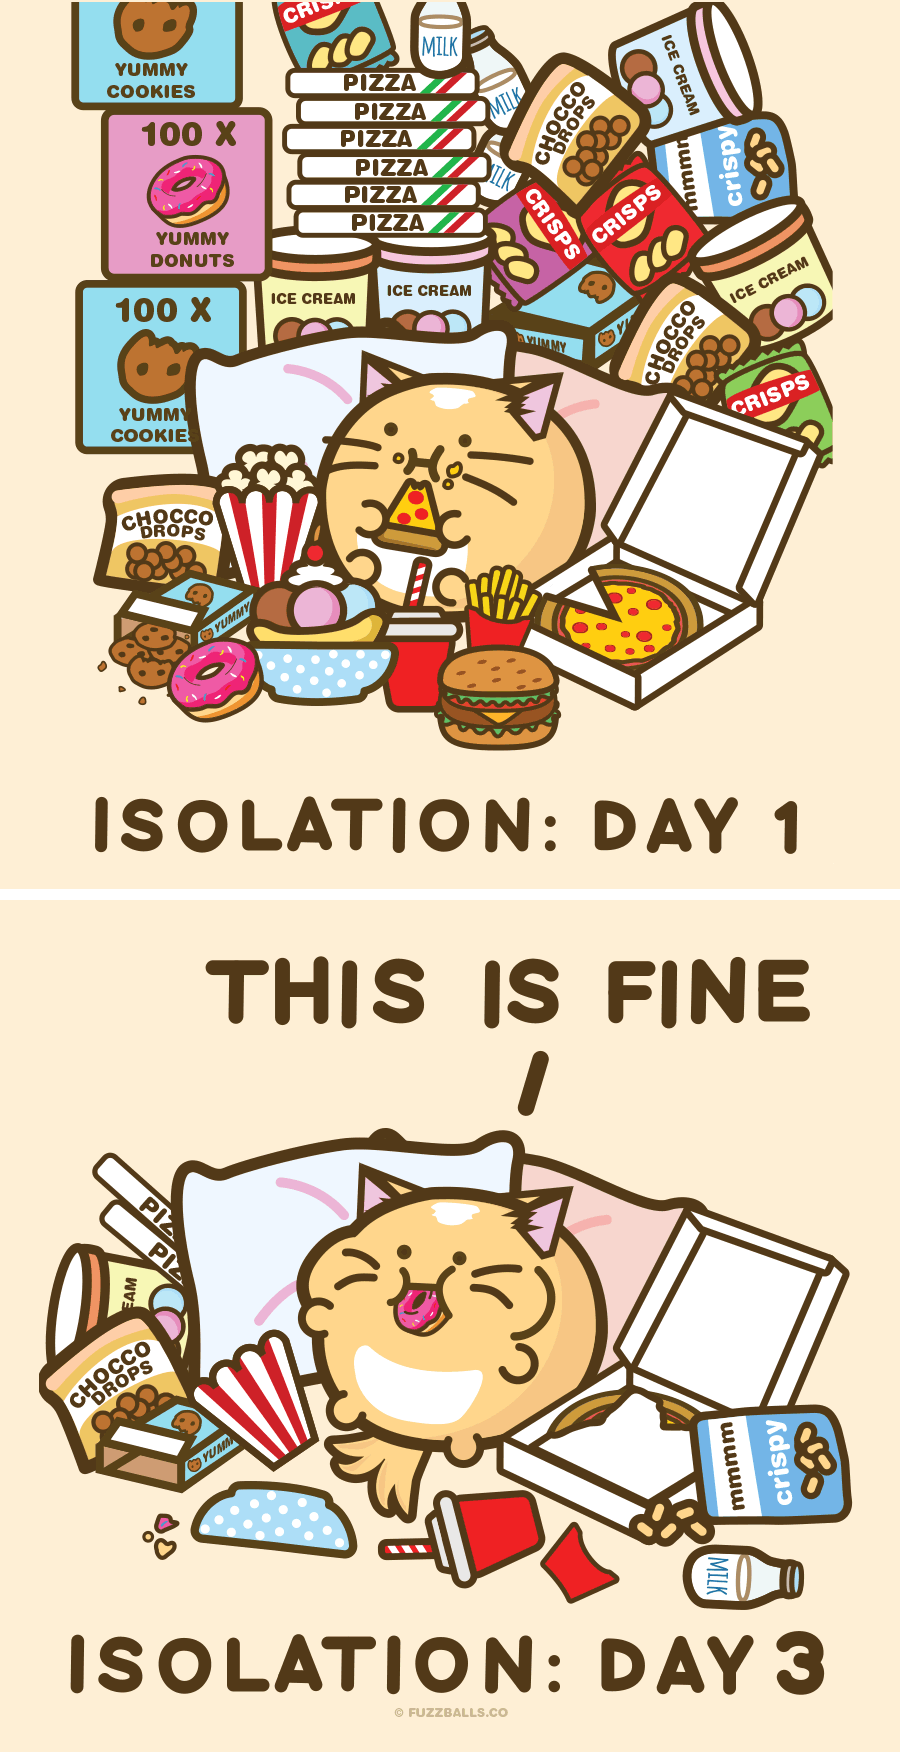 Isolation life